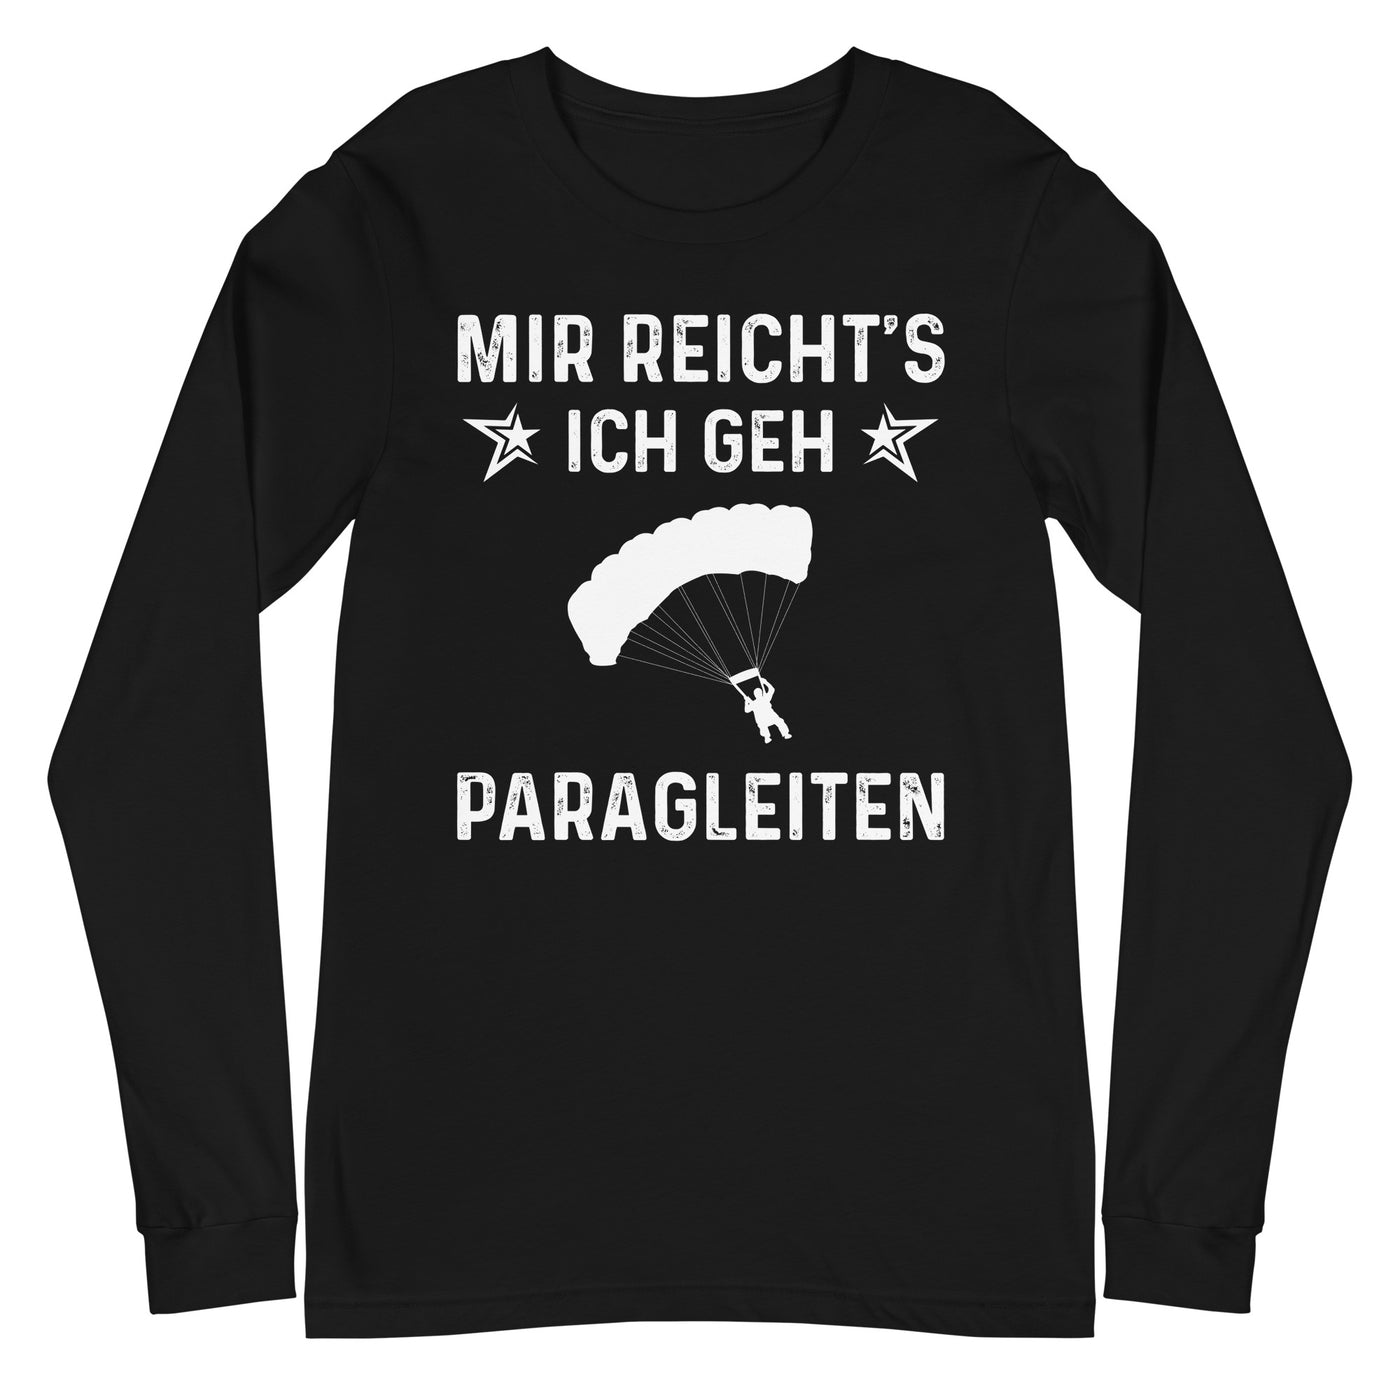 Mir Reicht's Ich Gen Paragleiten - Longsleeve (Unisex) berge xxx yyy zzz Black